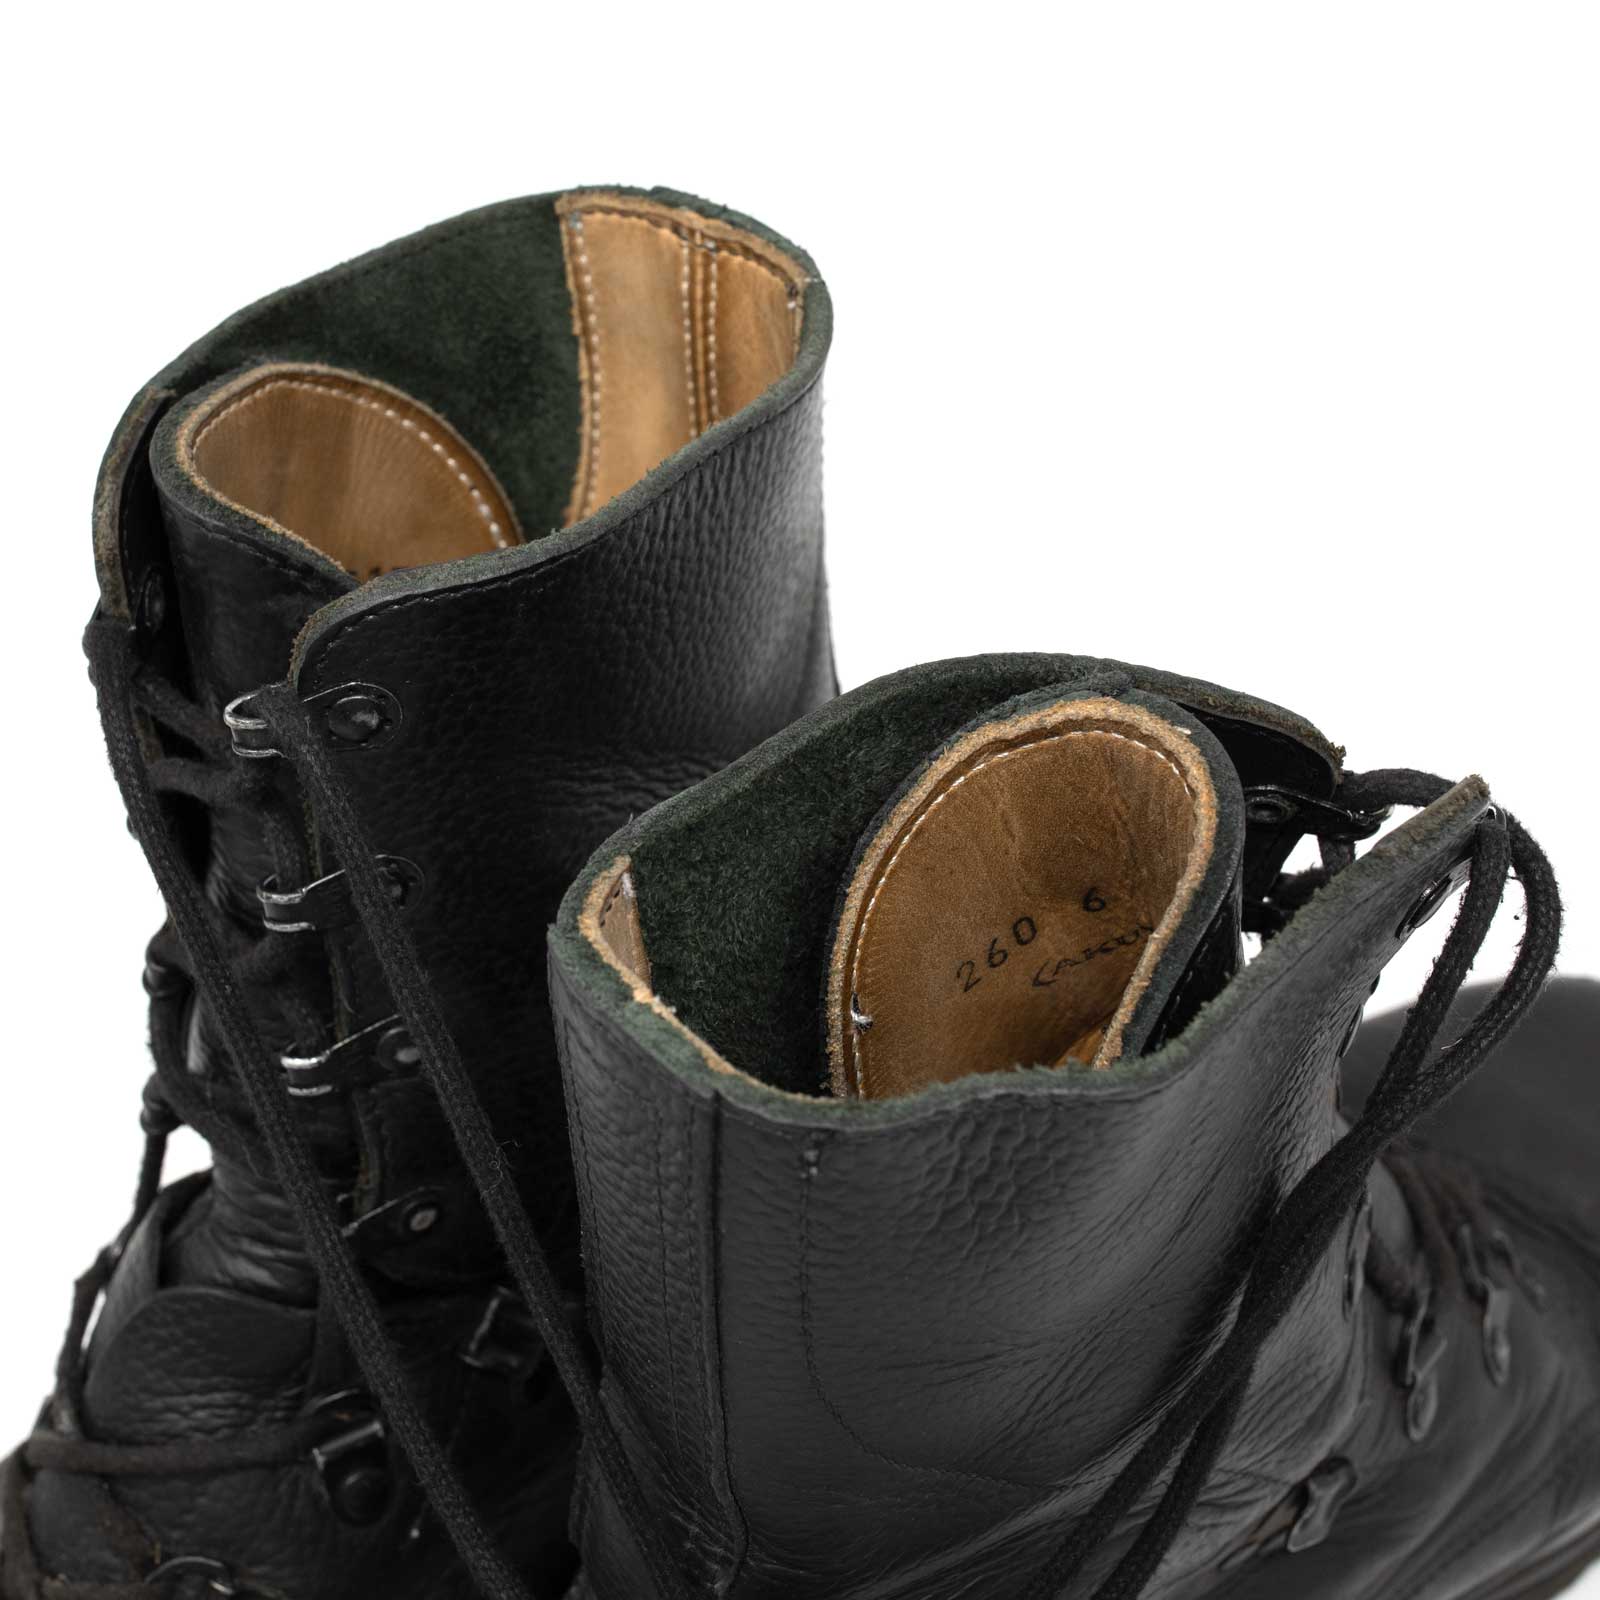 Swiss Military KS90 Combat Boots - Leather, Waterproof, Inside